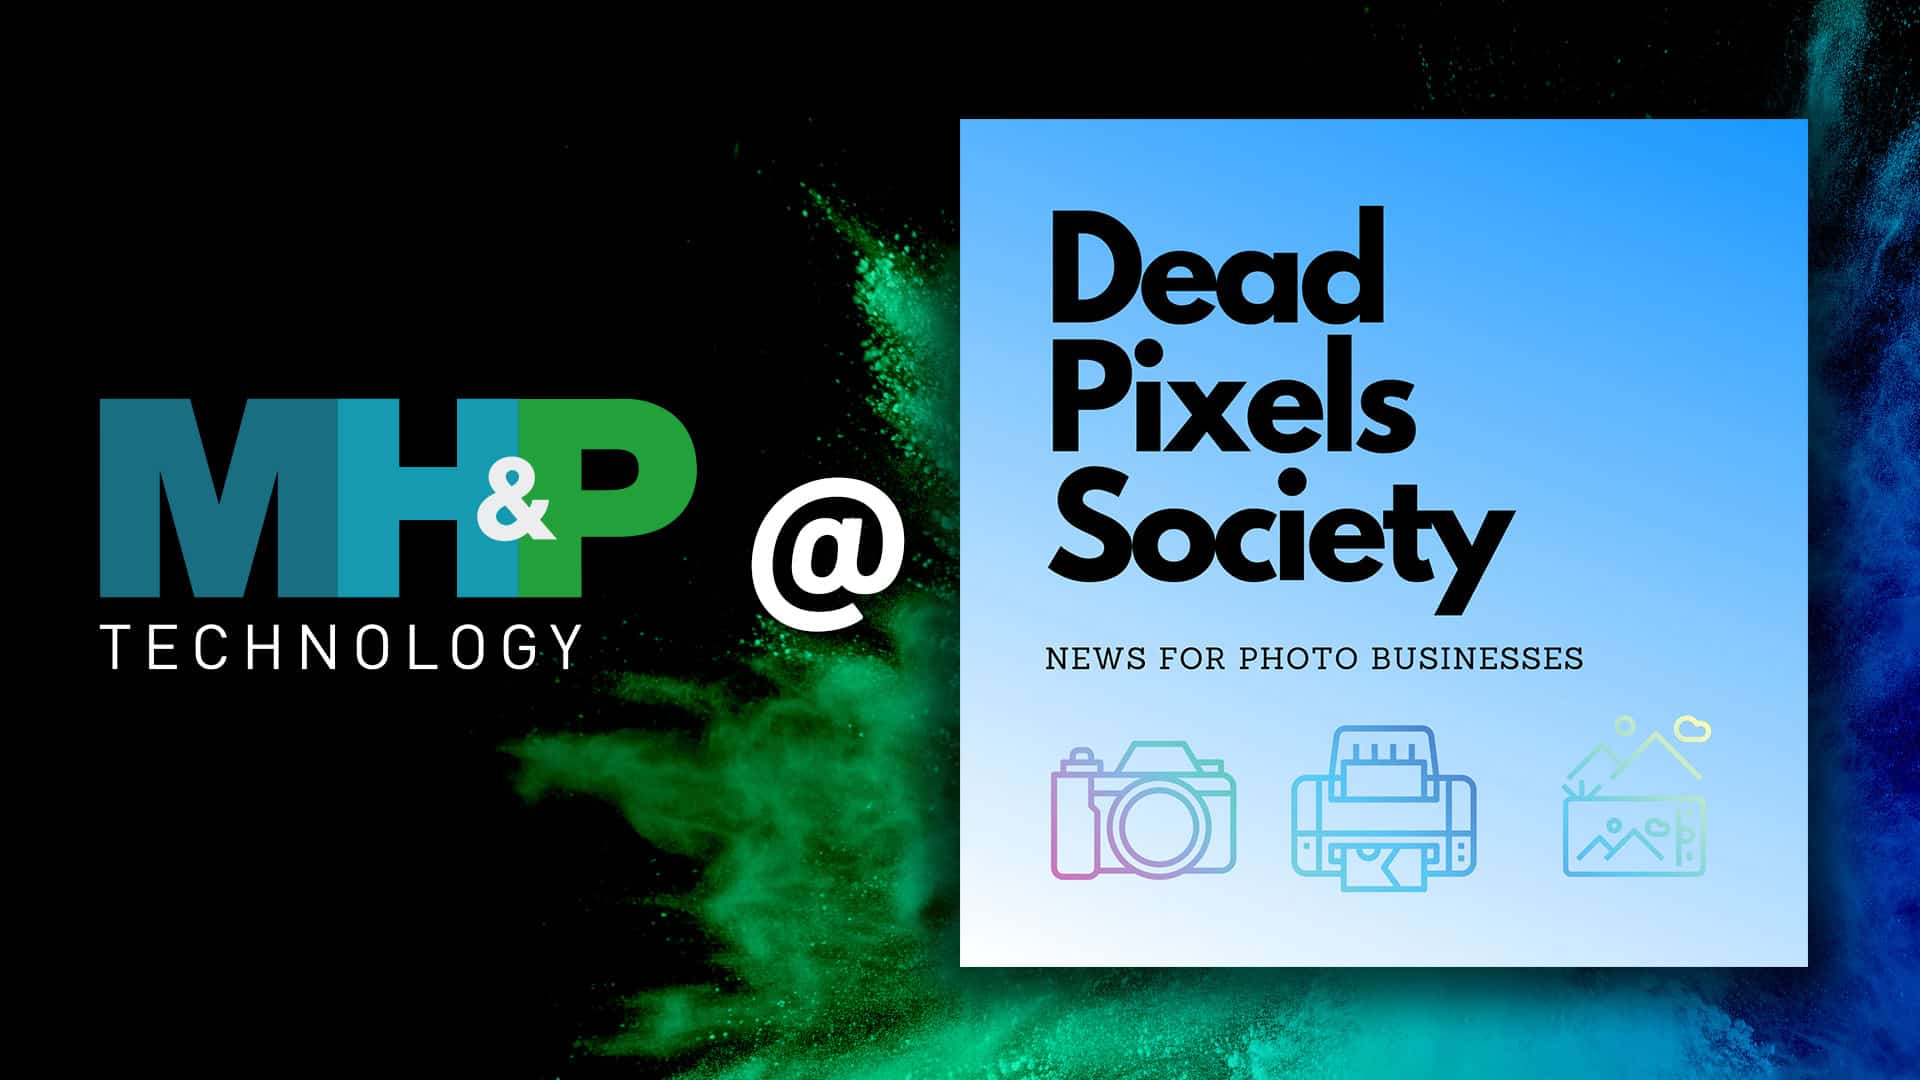 MHP Technology bei der Dead Pixels Society